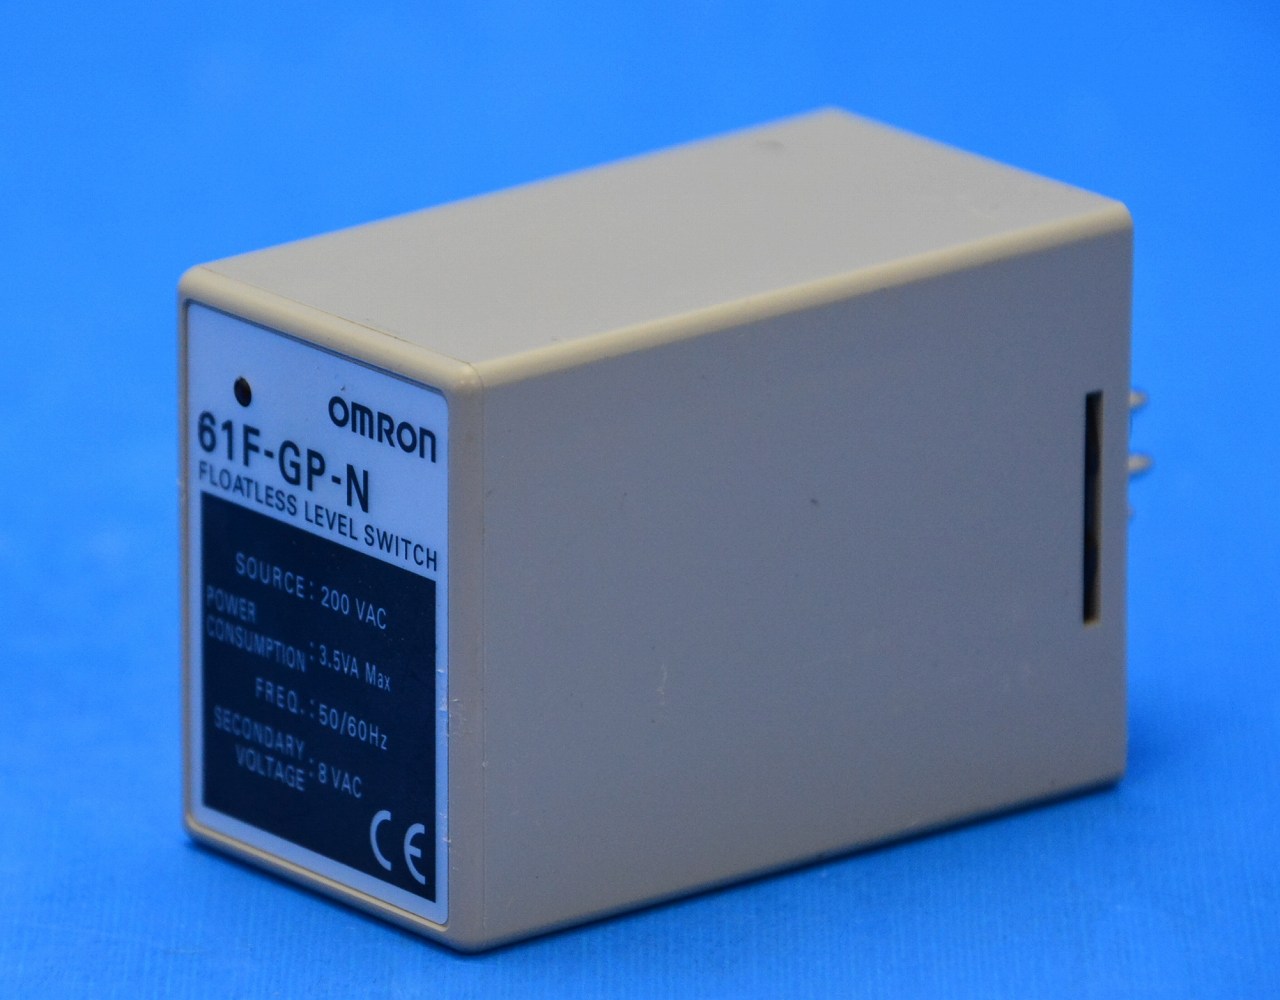 OMRON オムロン フロートなしスイッチ コンパクト プラグインタイプ 61F-GP-Nタイプ 61F-GP-N8 【限定製作】